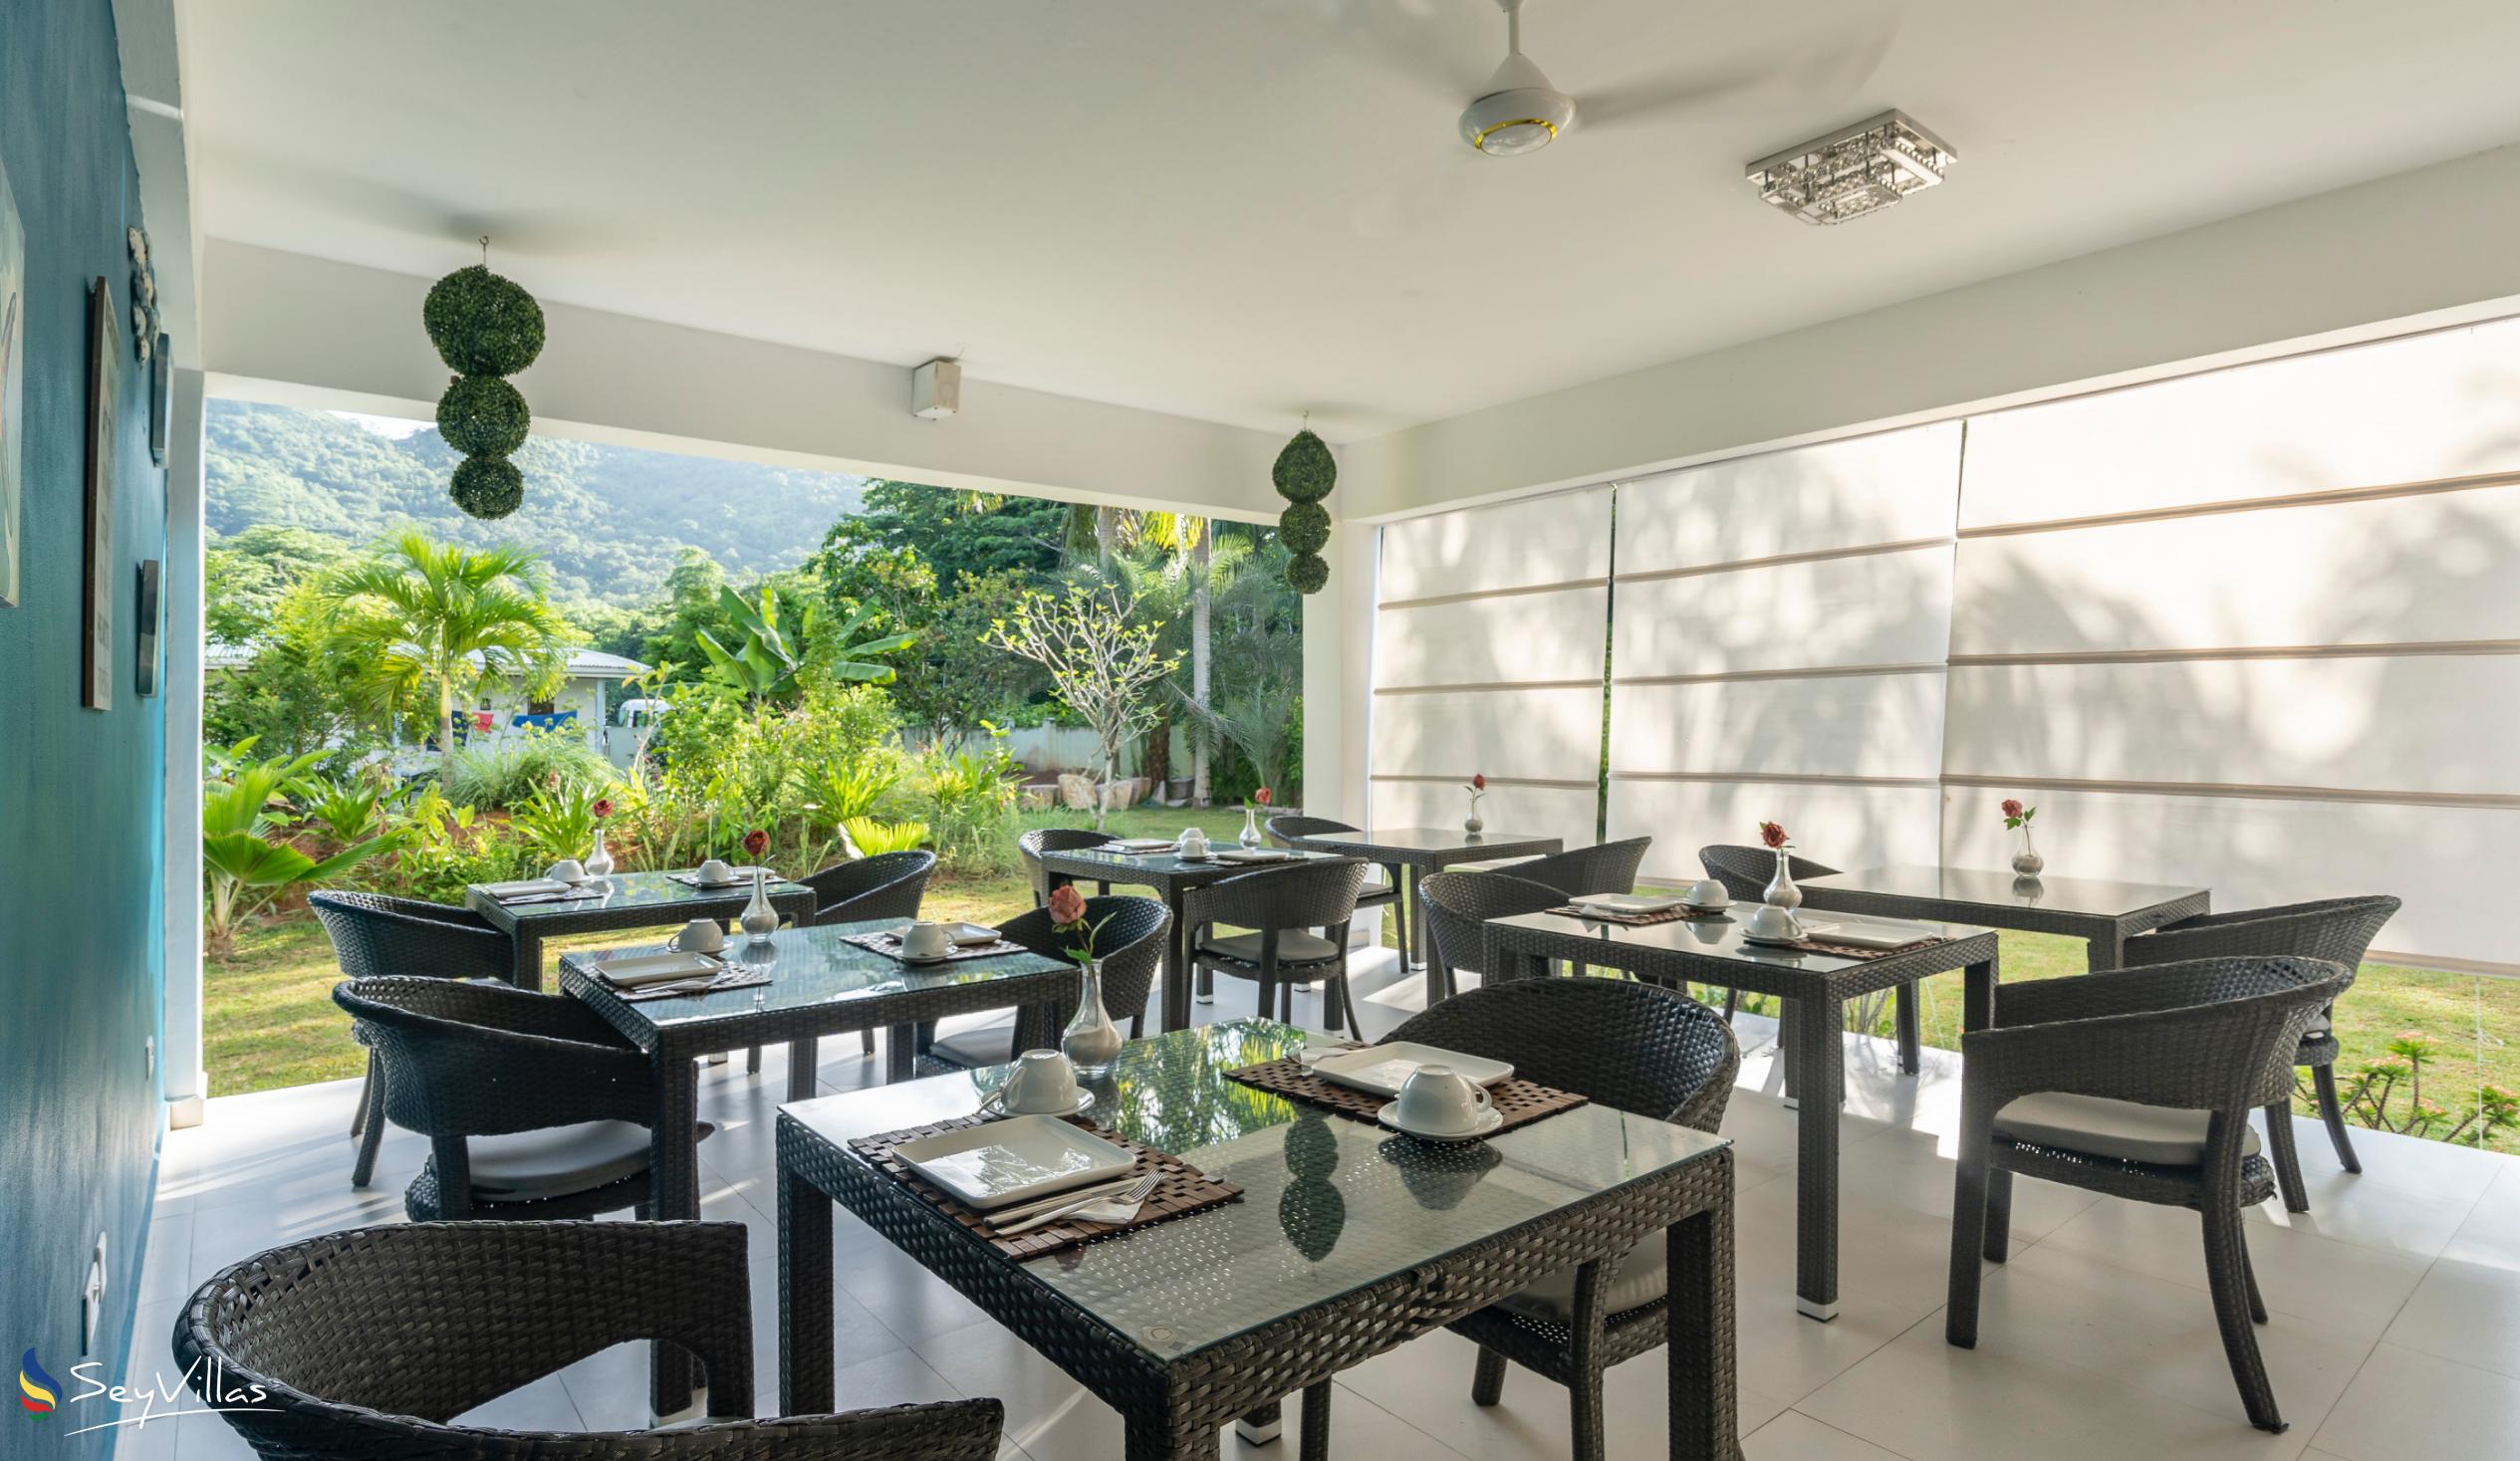 Photo 61: La Modestie Villa - Indoor area - Praslin (Seychelles)